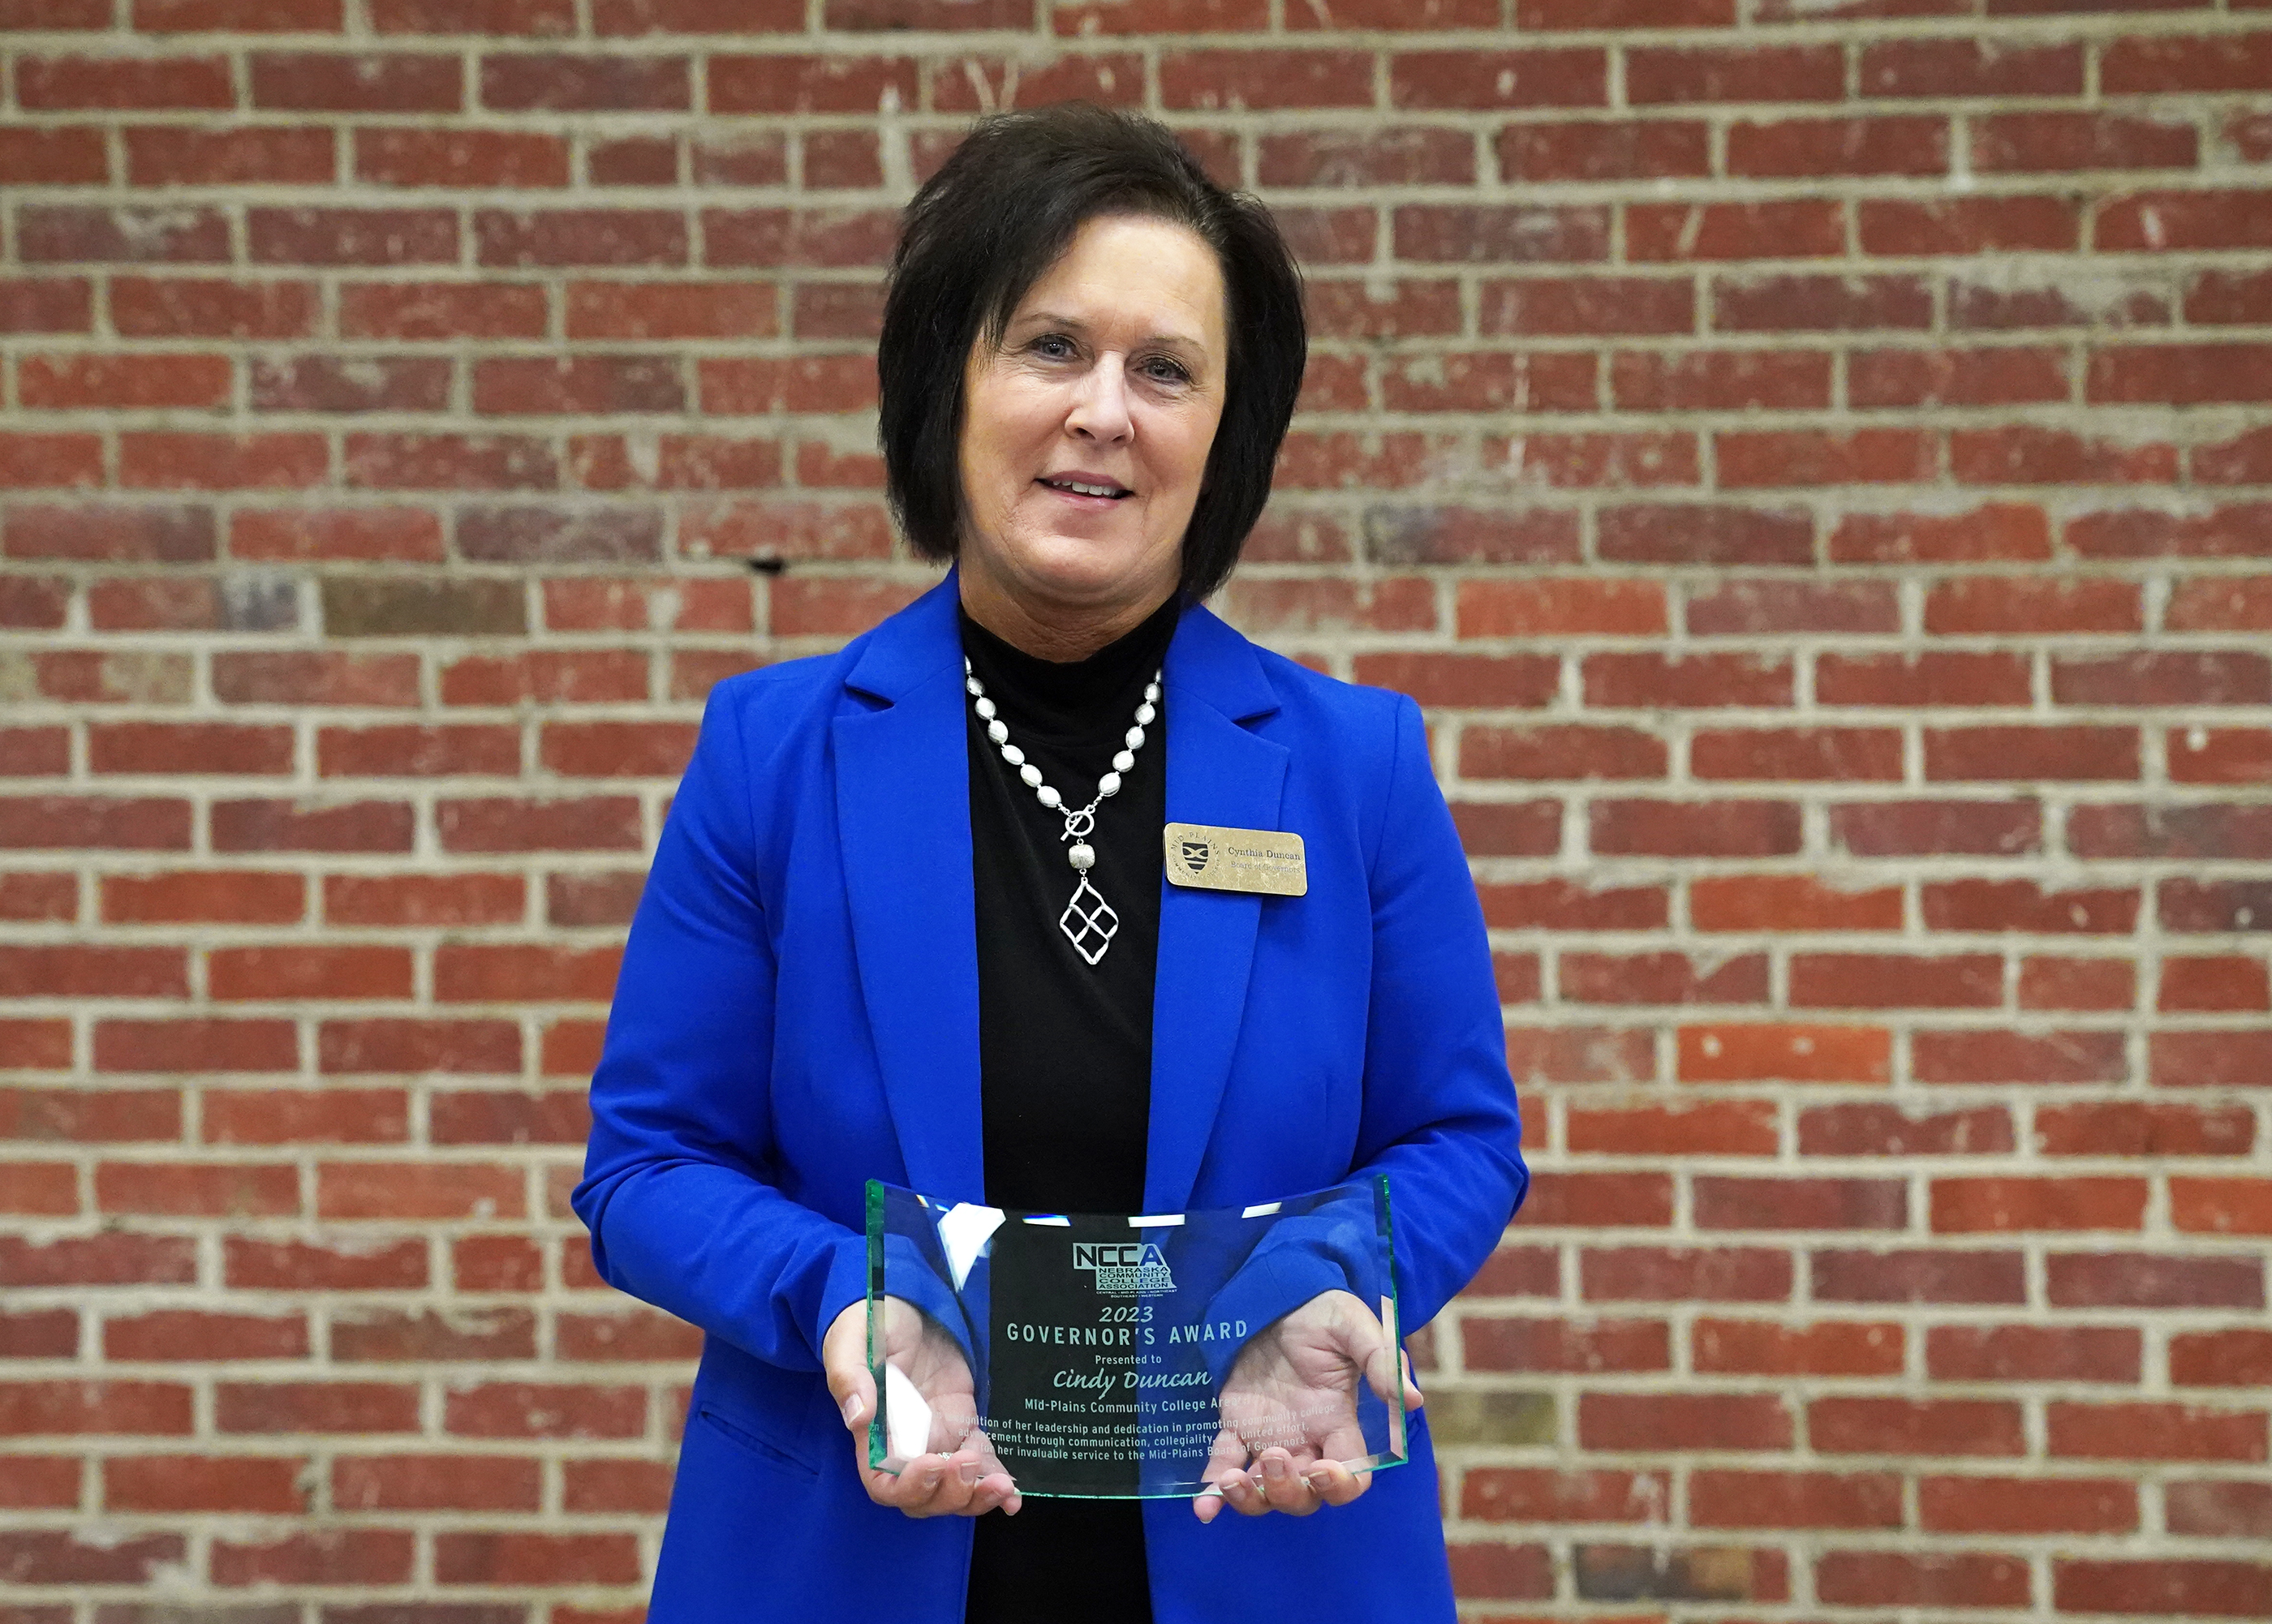 Cindy Duncan Governors Award